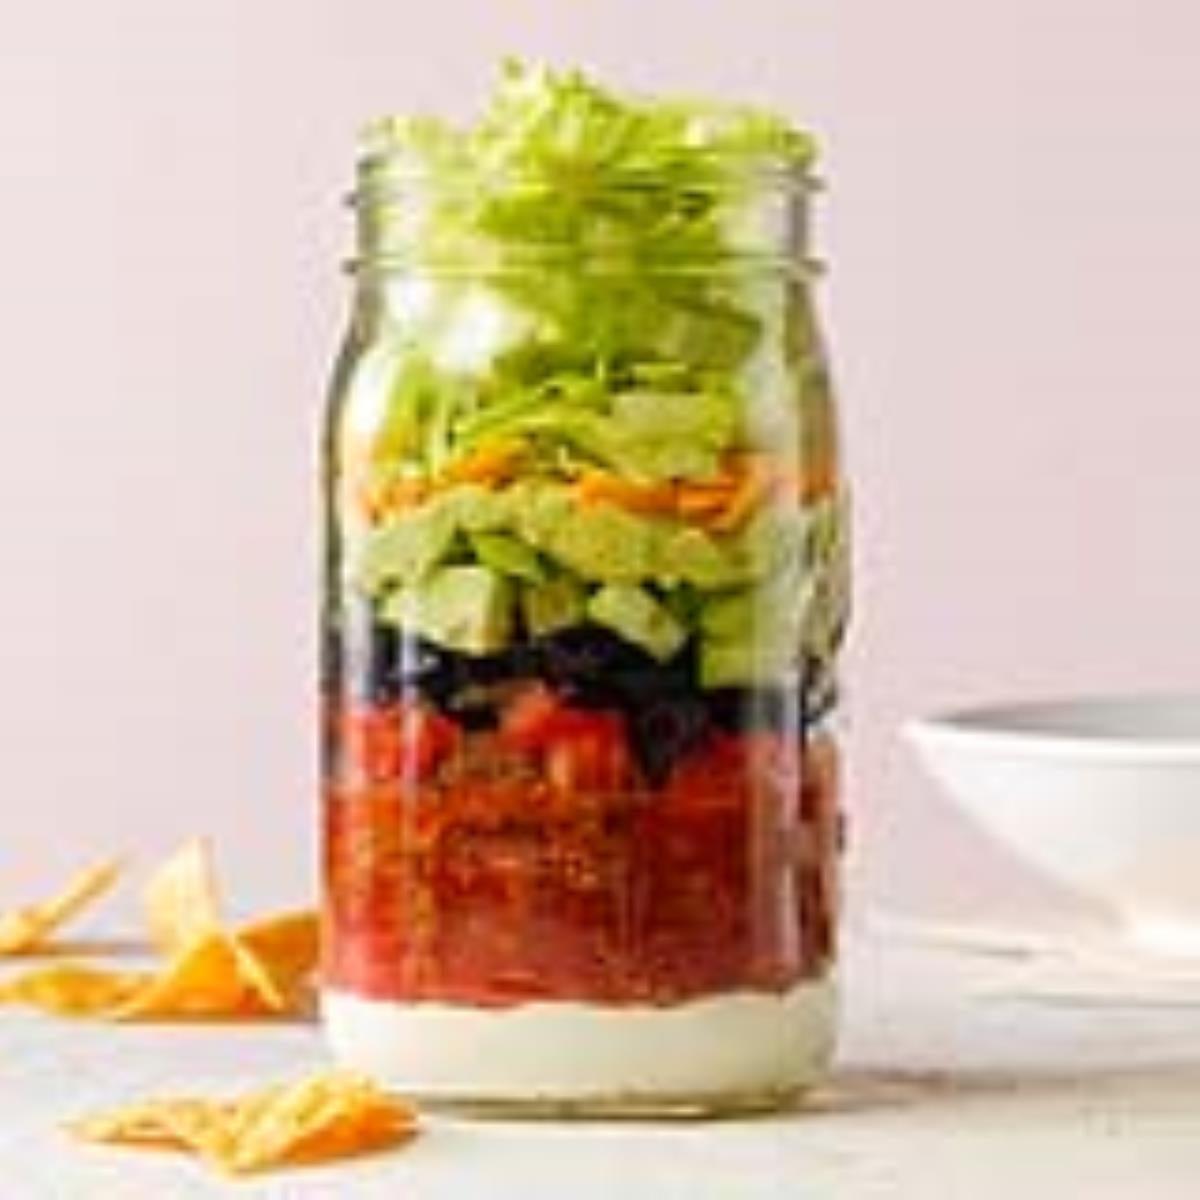 Taco Mason Jar Salad Recipe